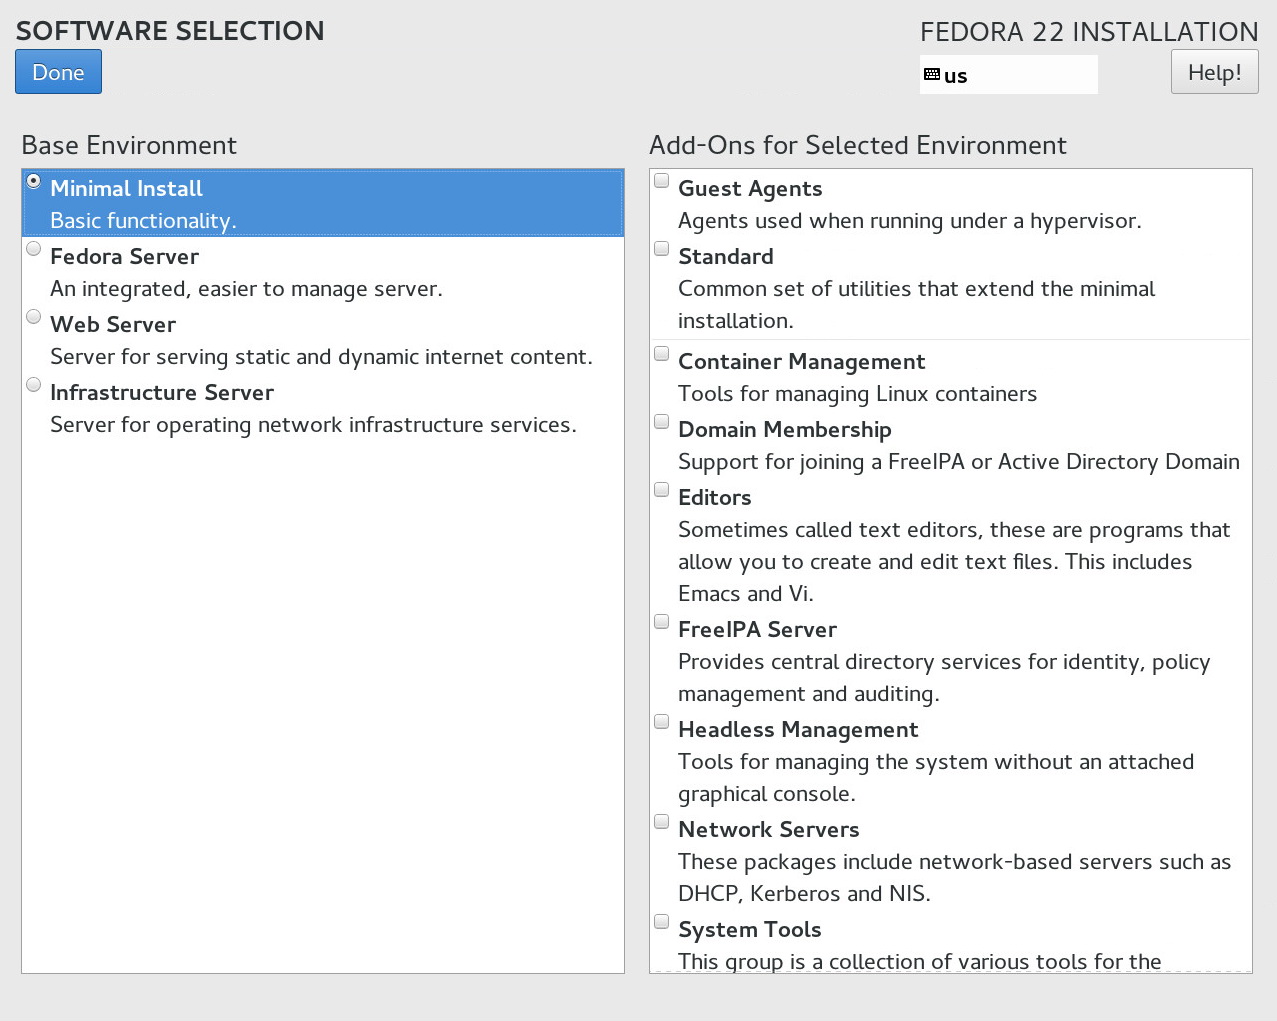 File:Fedora 22 Kodi 15 Install 002 - Software Selection.jpg